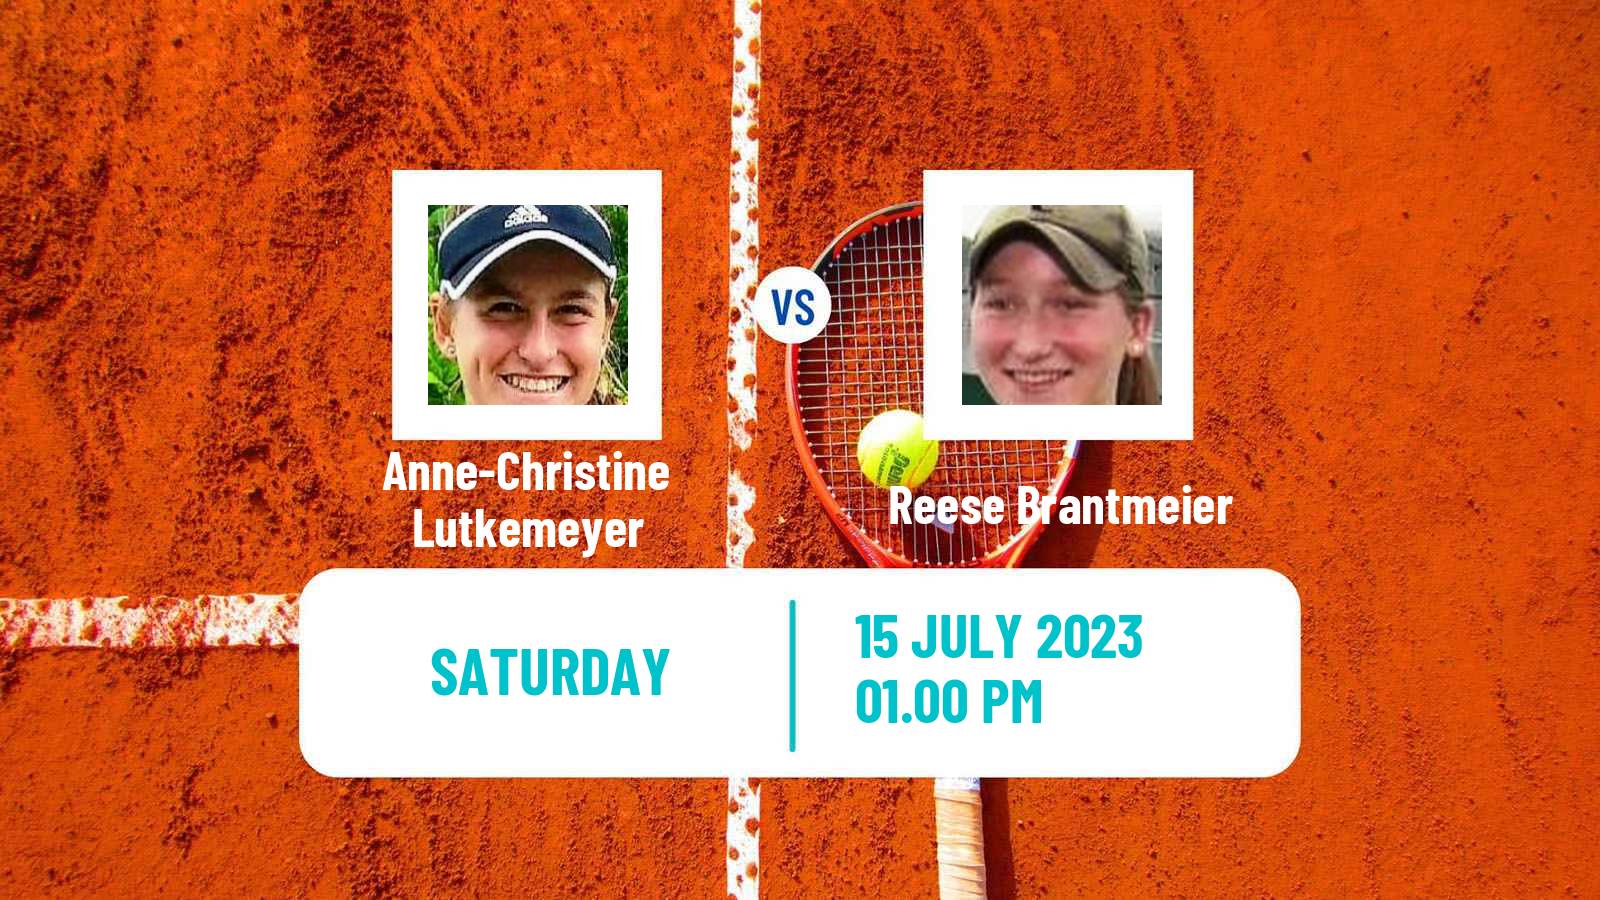 Tennis ITF W15 Lakewood Ca 2 Women Anne-Christine Lutkemeyer - Reese Brantmeier